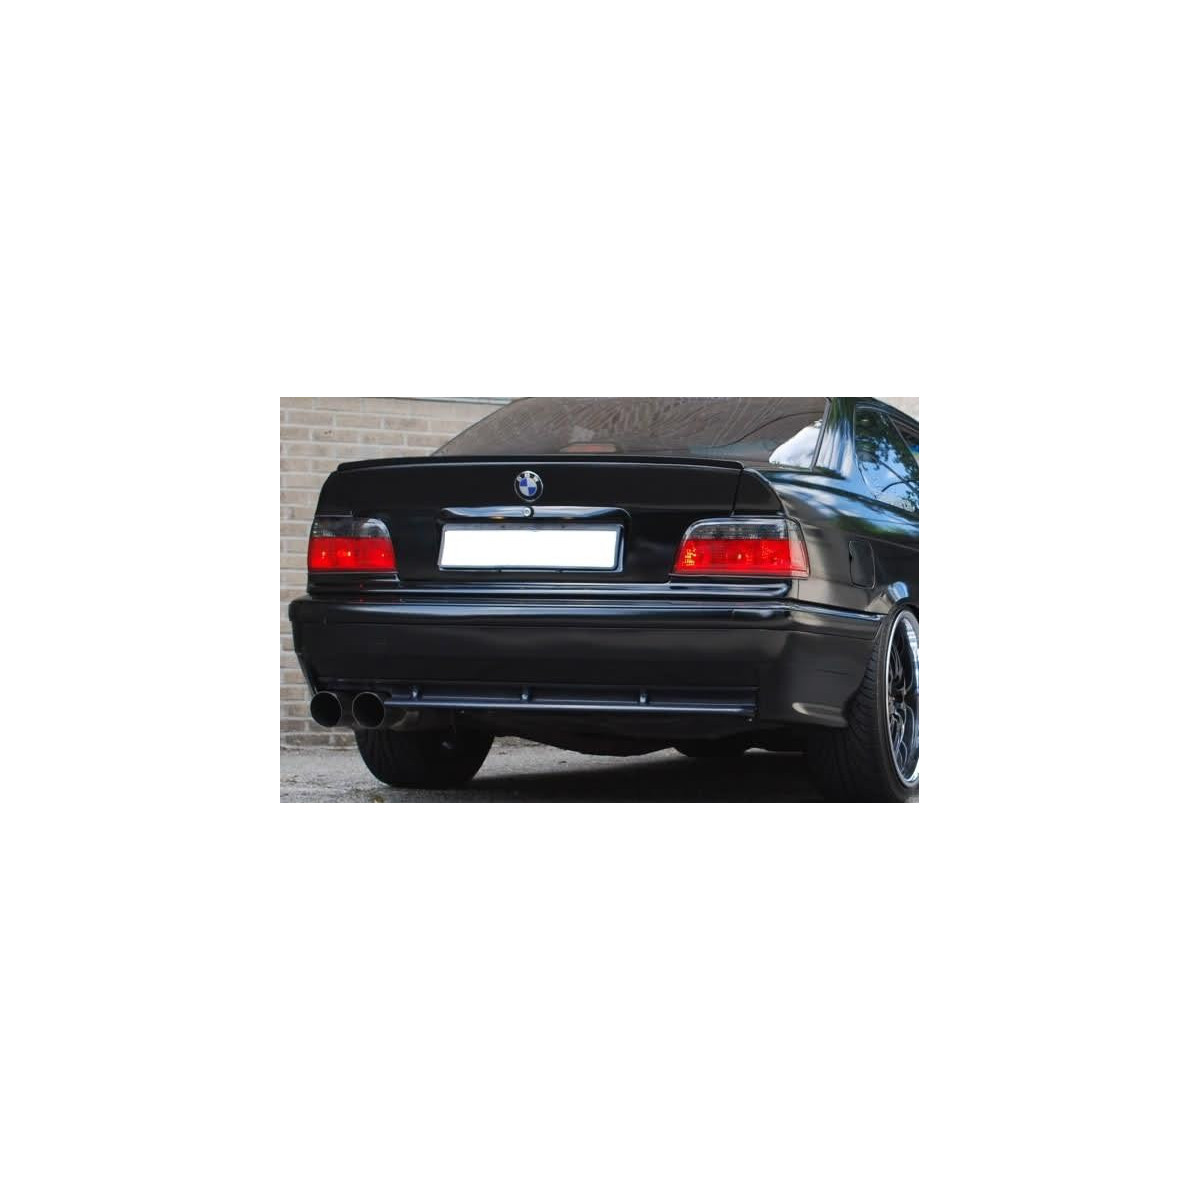 SPOILER NA KLAPE BMW E36 COUPE 92-99 PU ABS